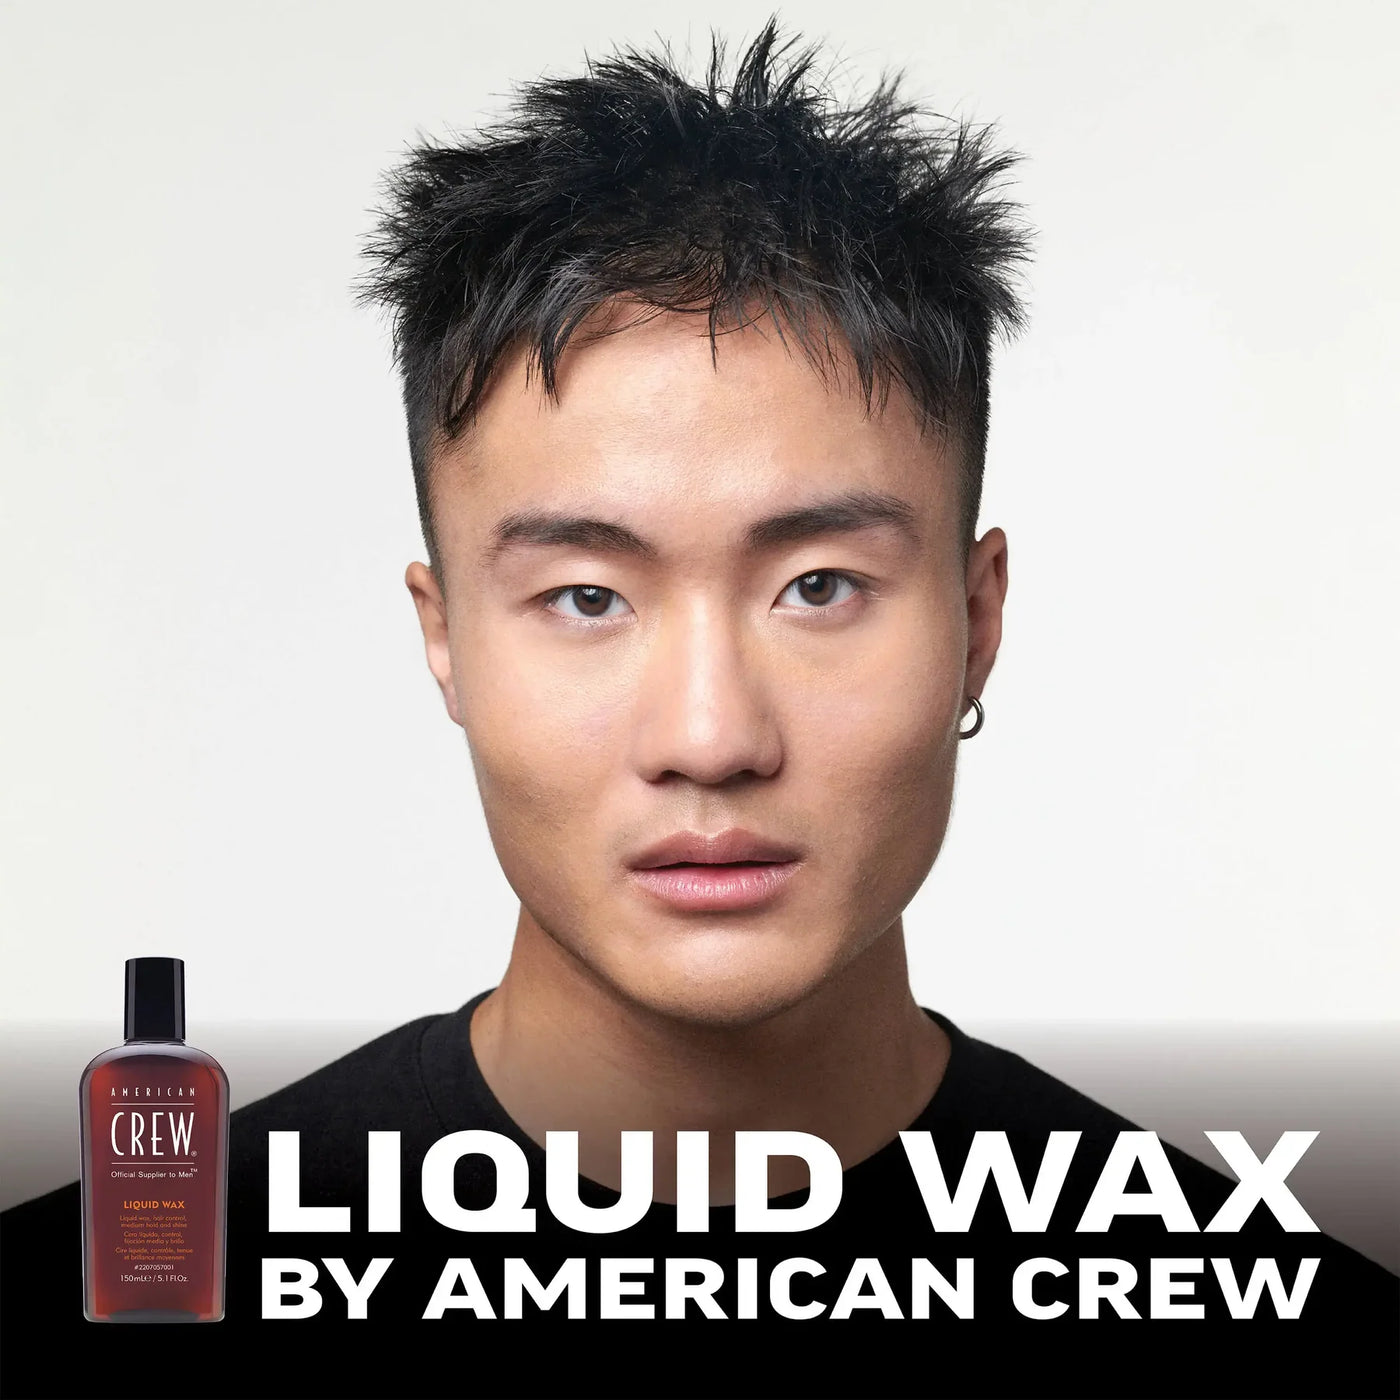 American Crew Liquid Hair Wax